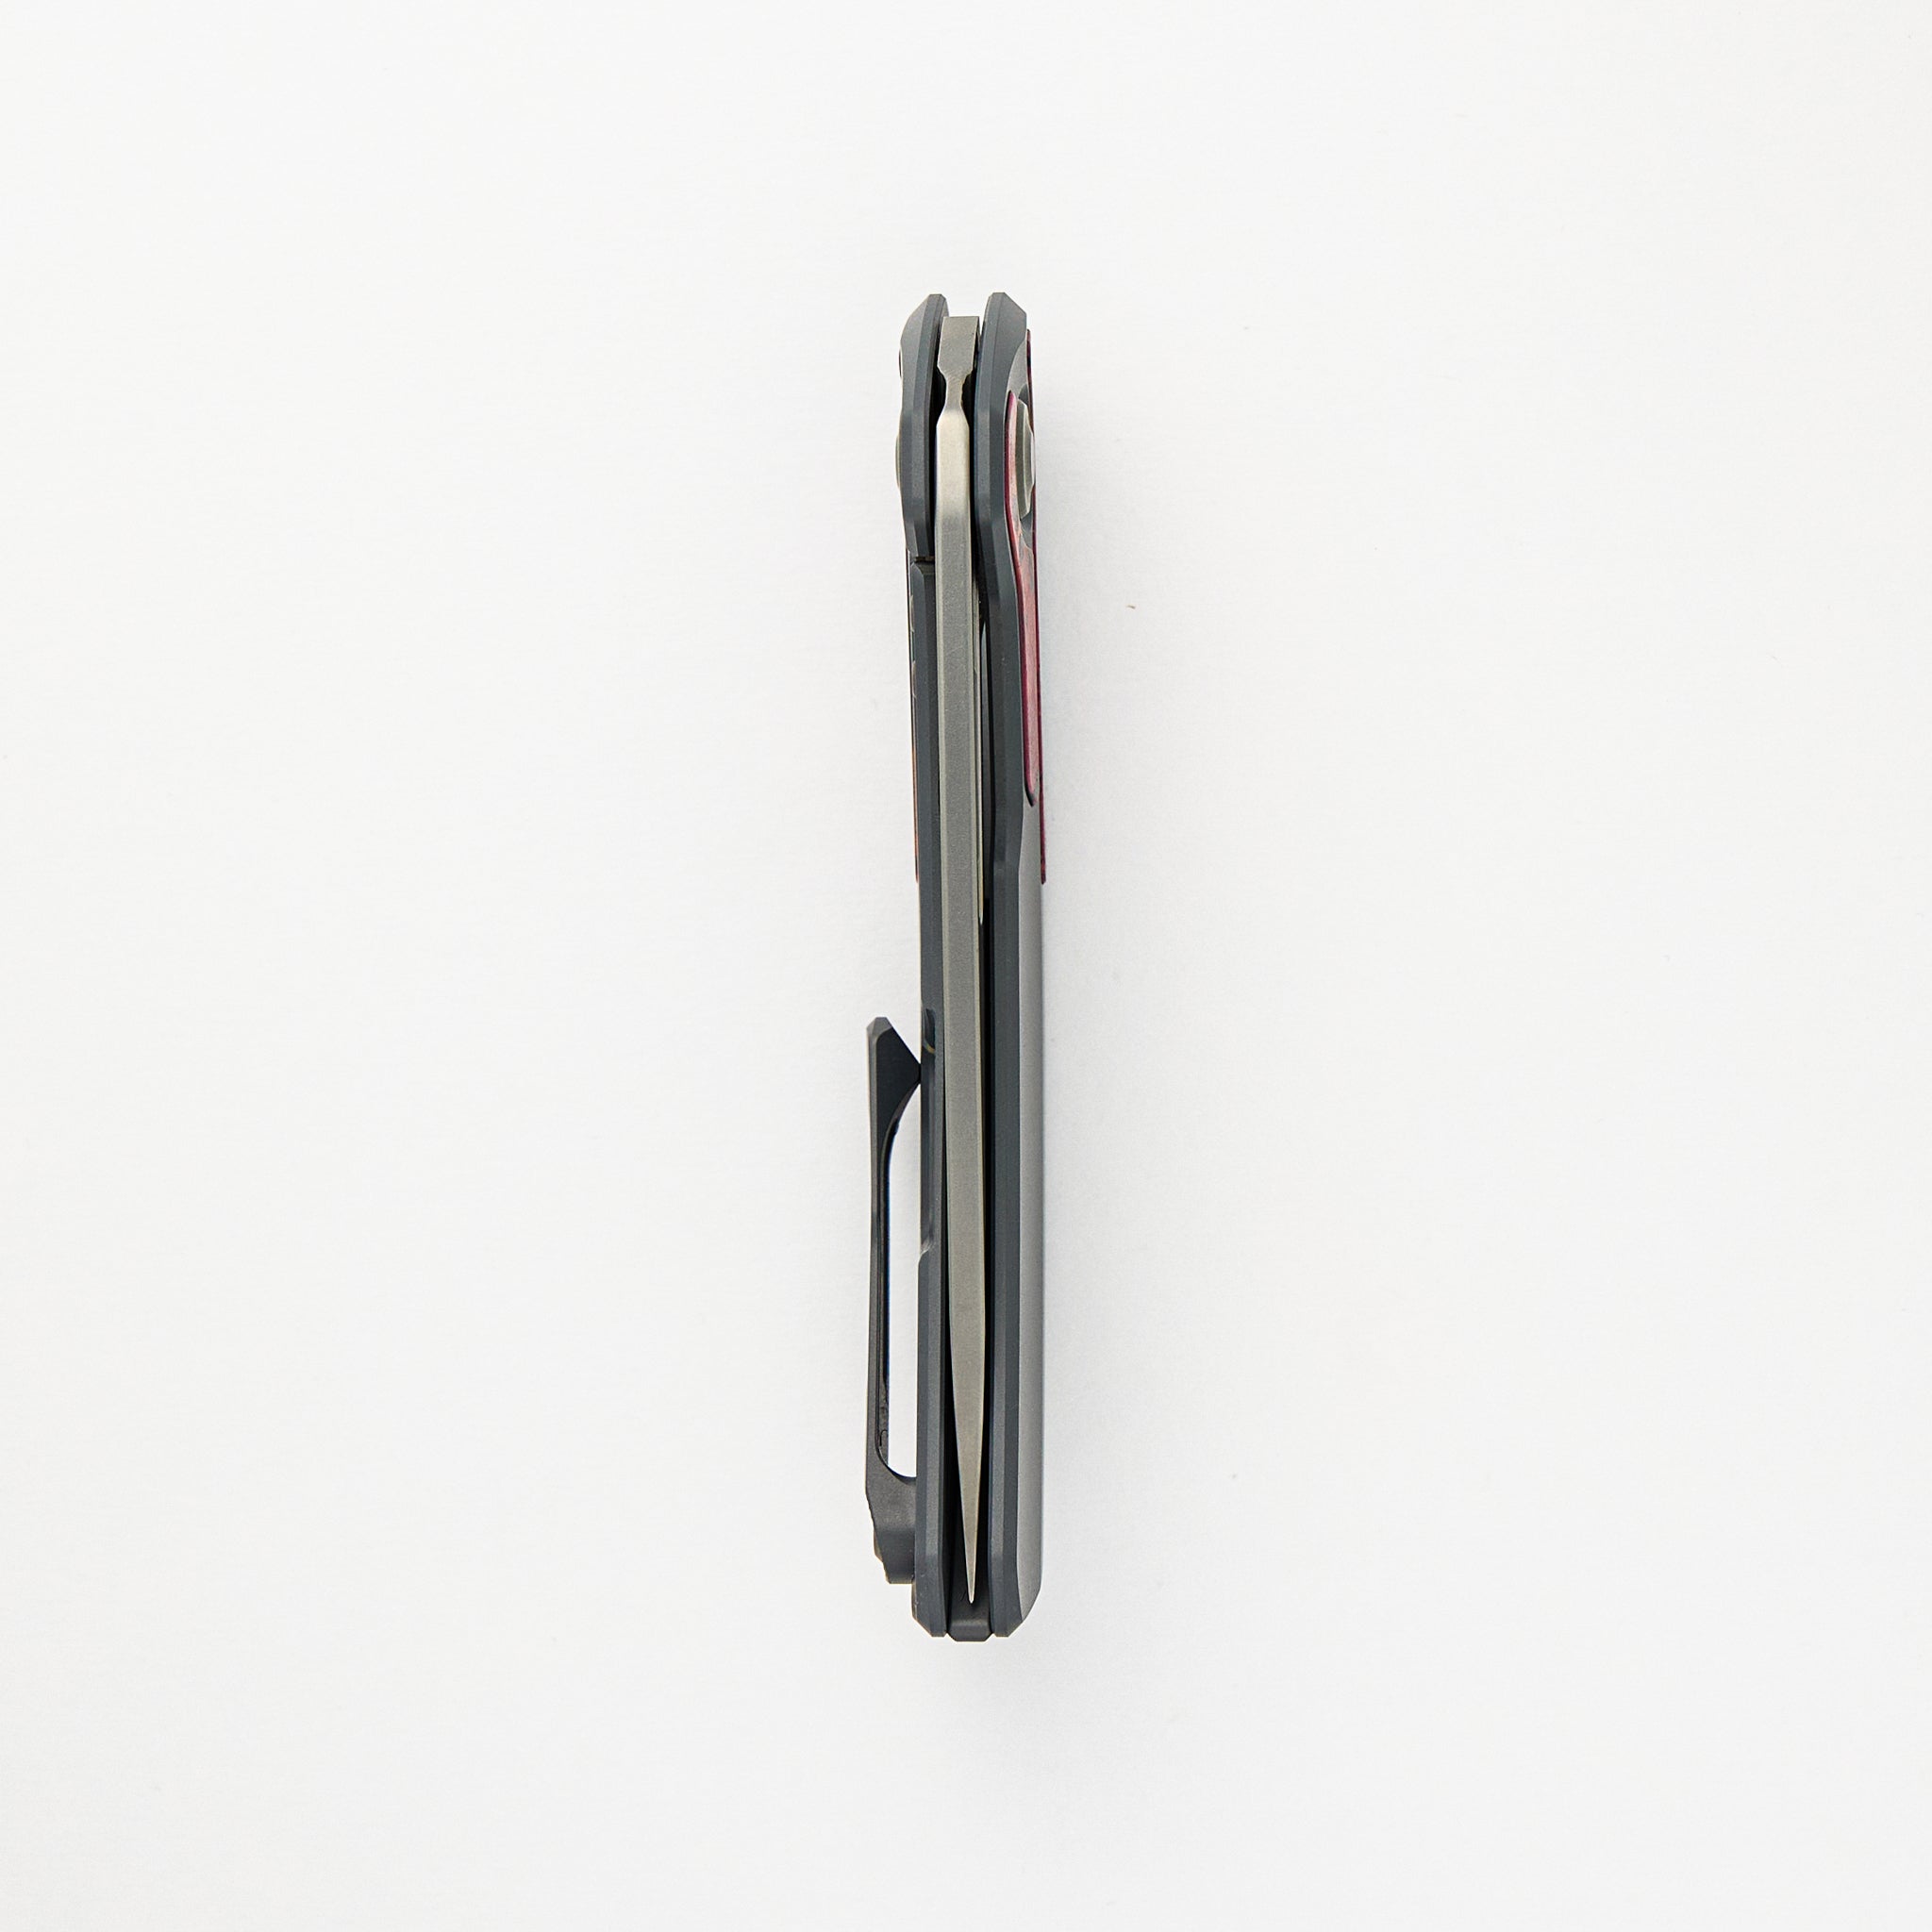 Tactile Knife Company Archer - Titanium/Flamed Copper Handle - MagnaCut Blade